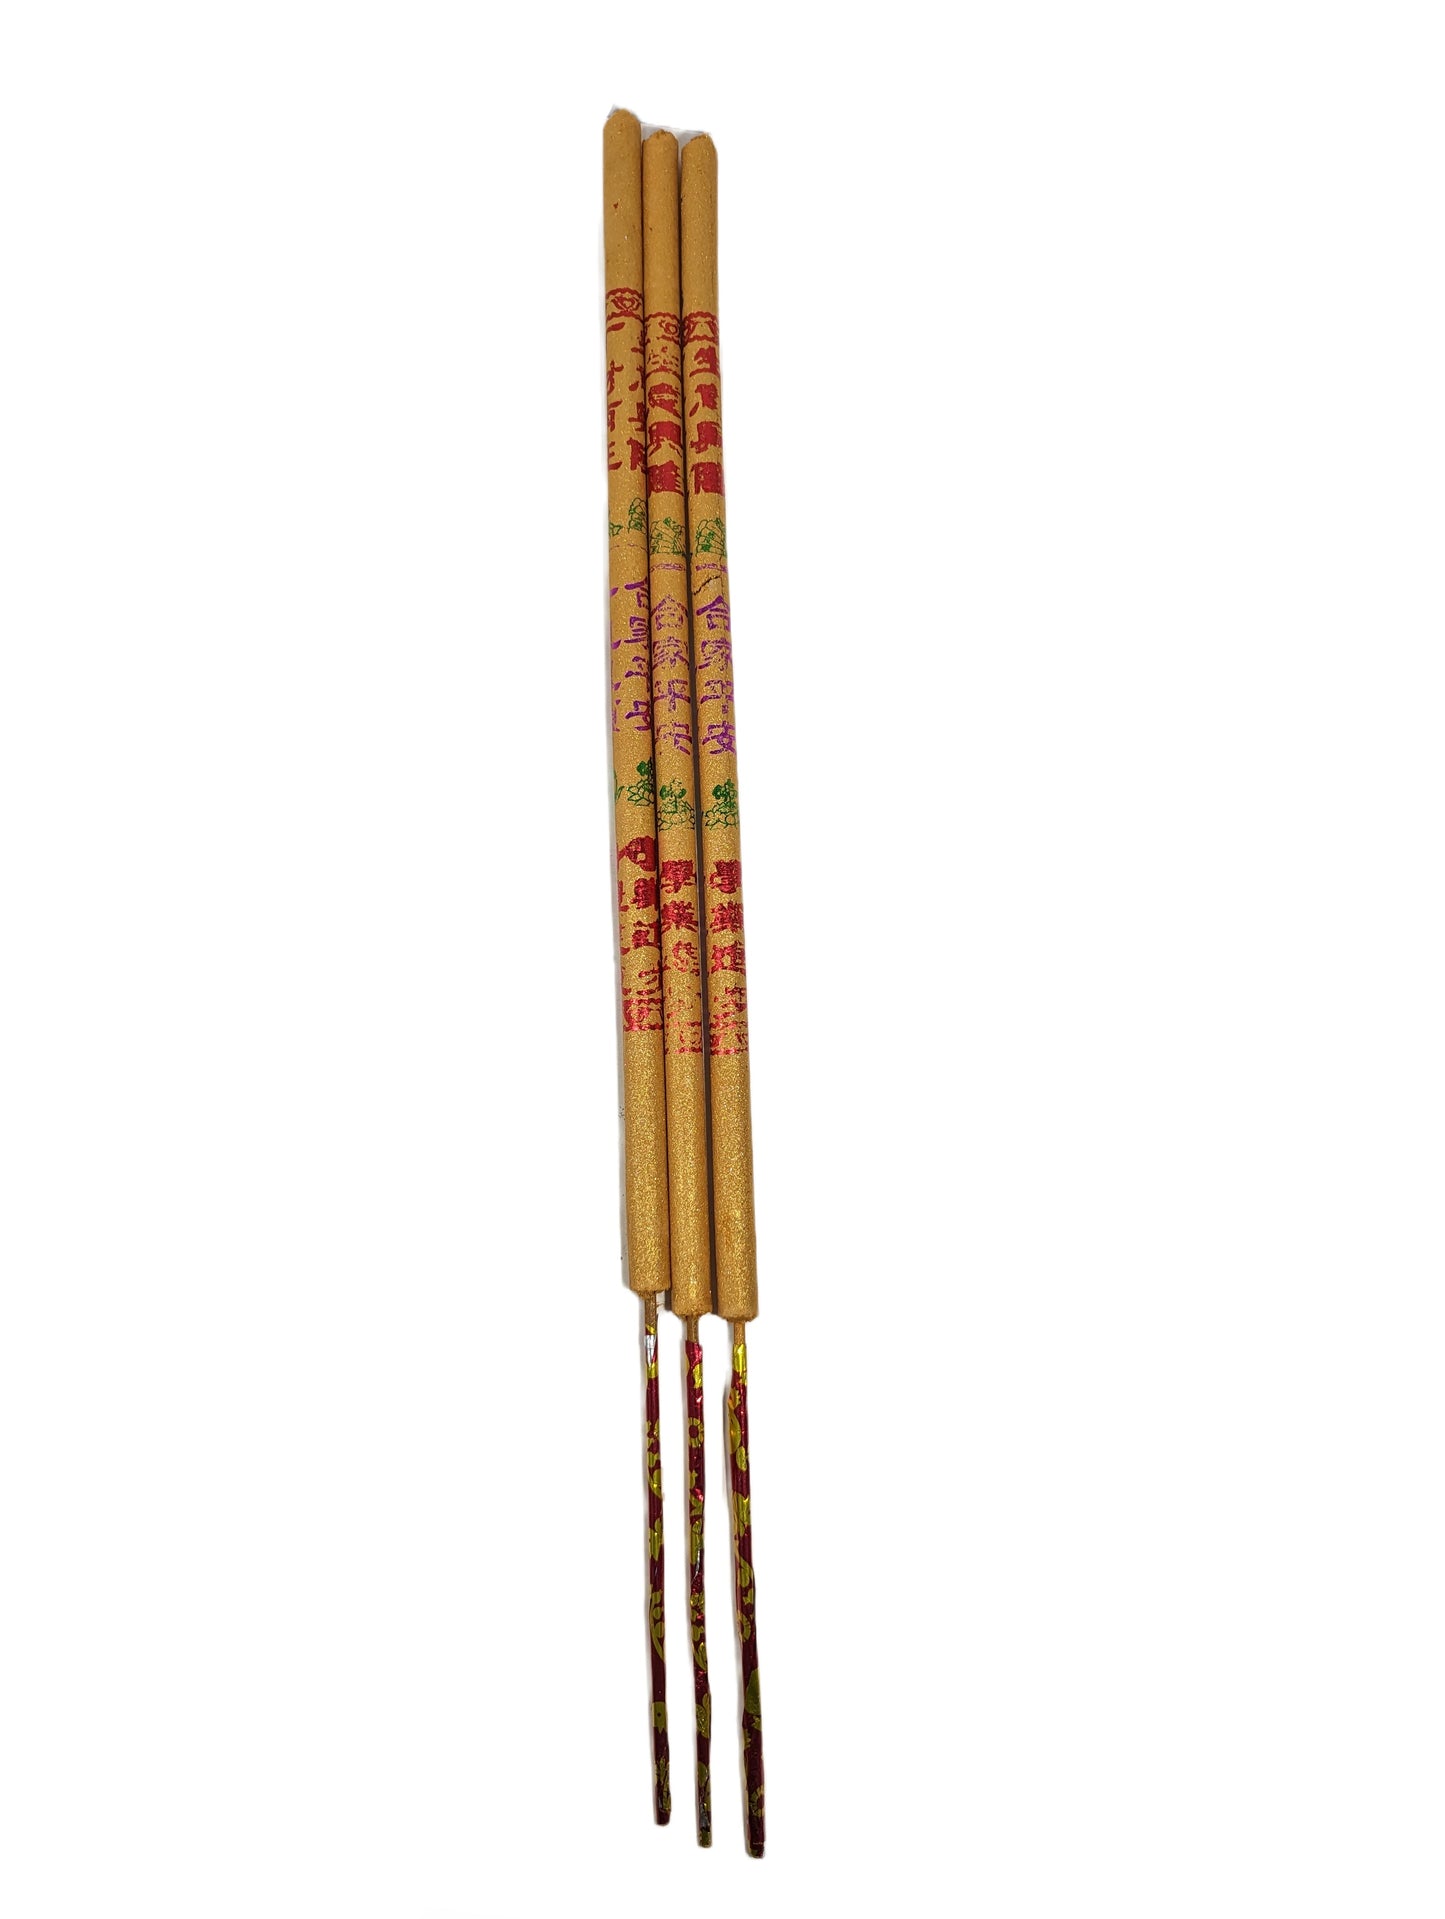 1.25cm Thick Incense Sticks for Wishes Prosperity and Health - 60cm Long 3 Sticks 生意兴隆 合家平安 粗香